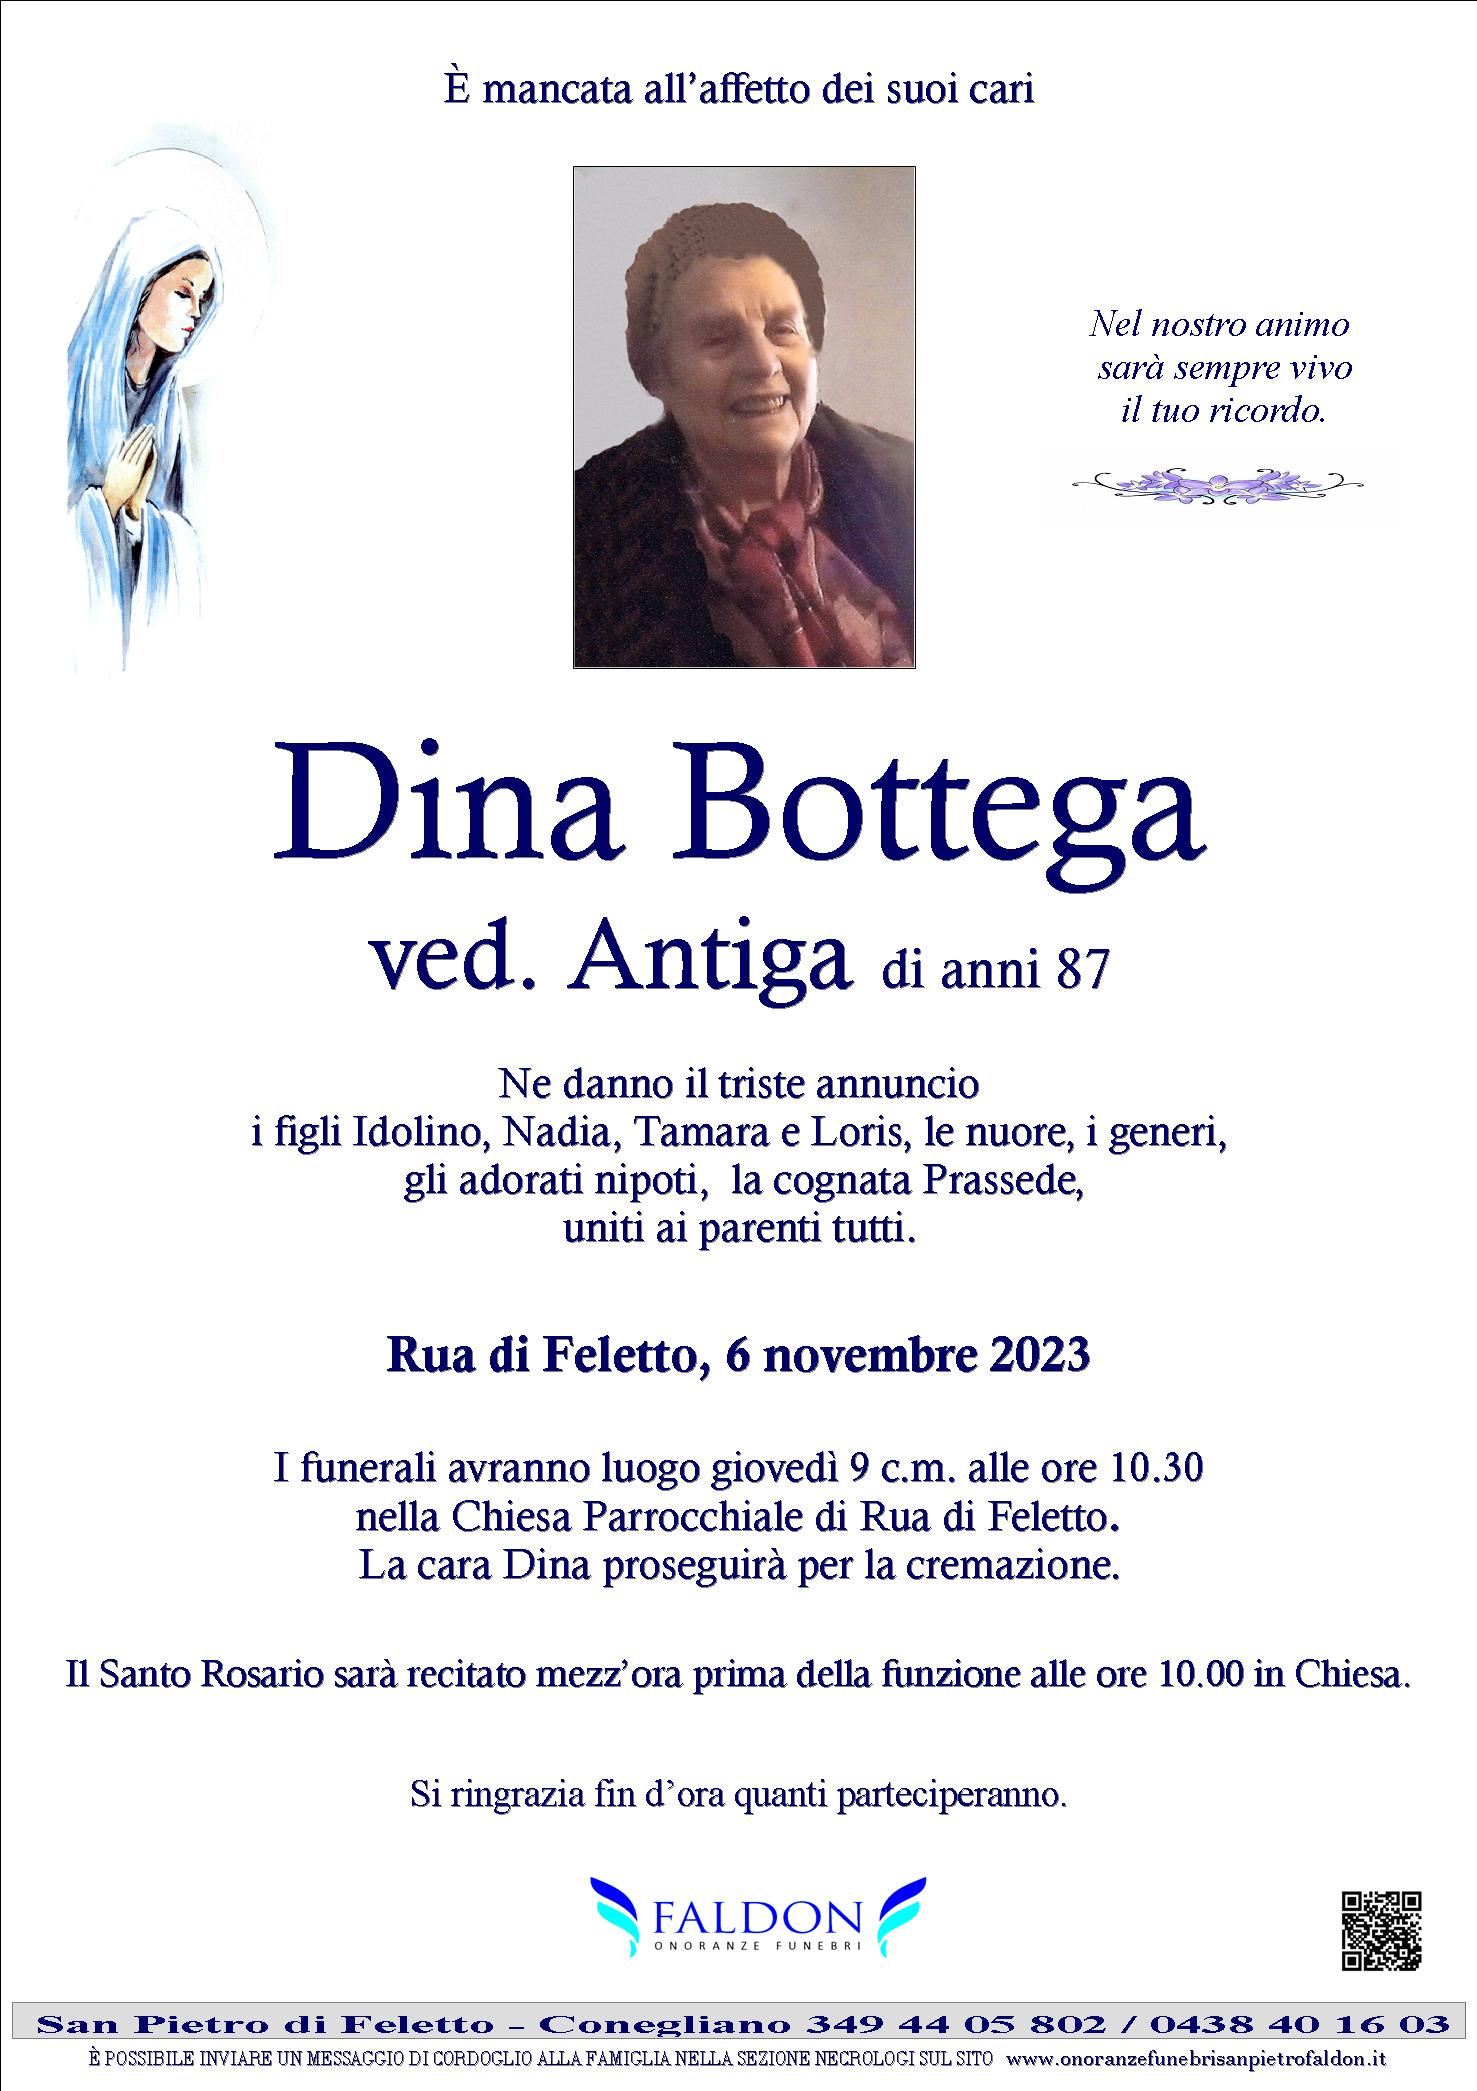 Dina Bottega